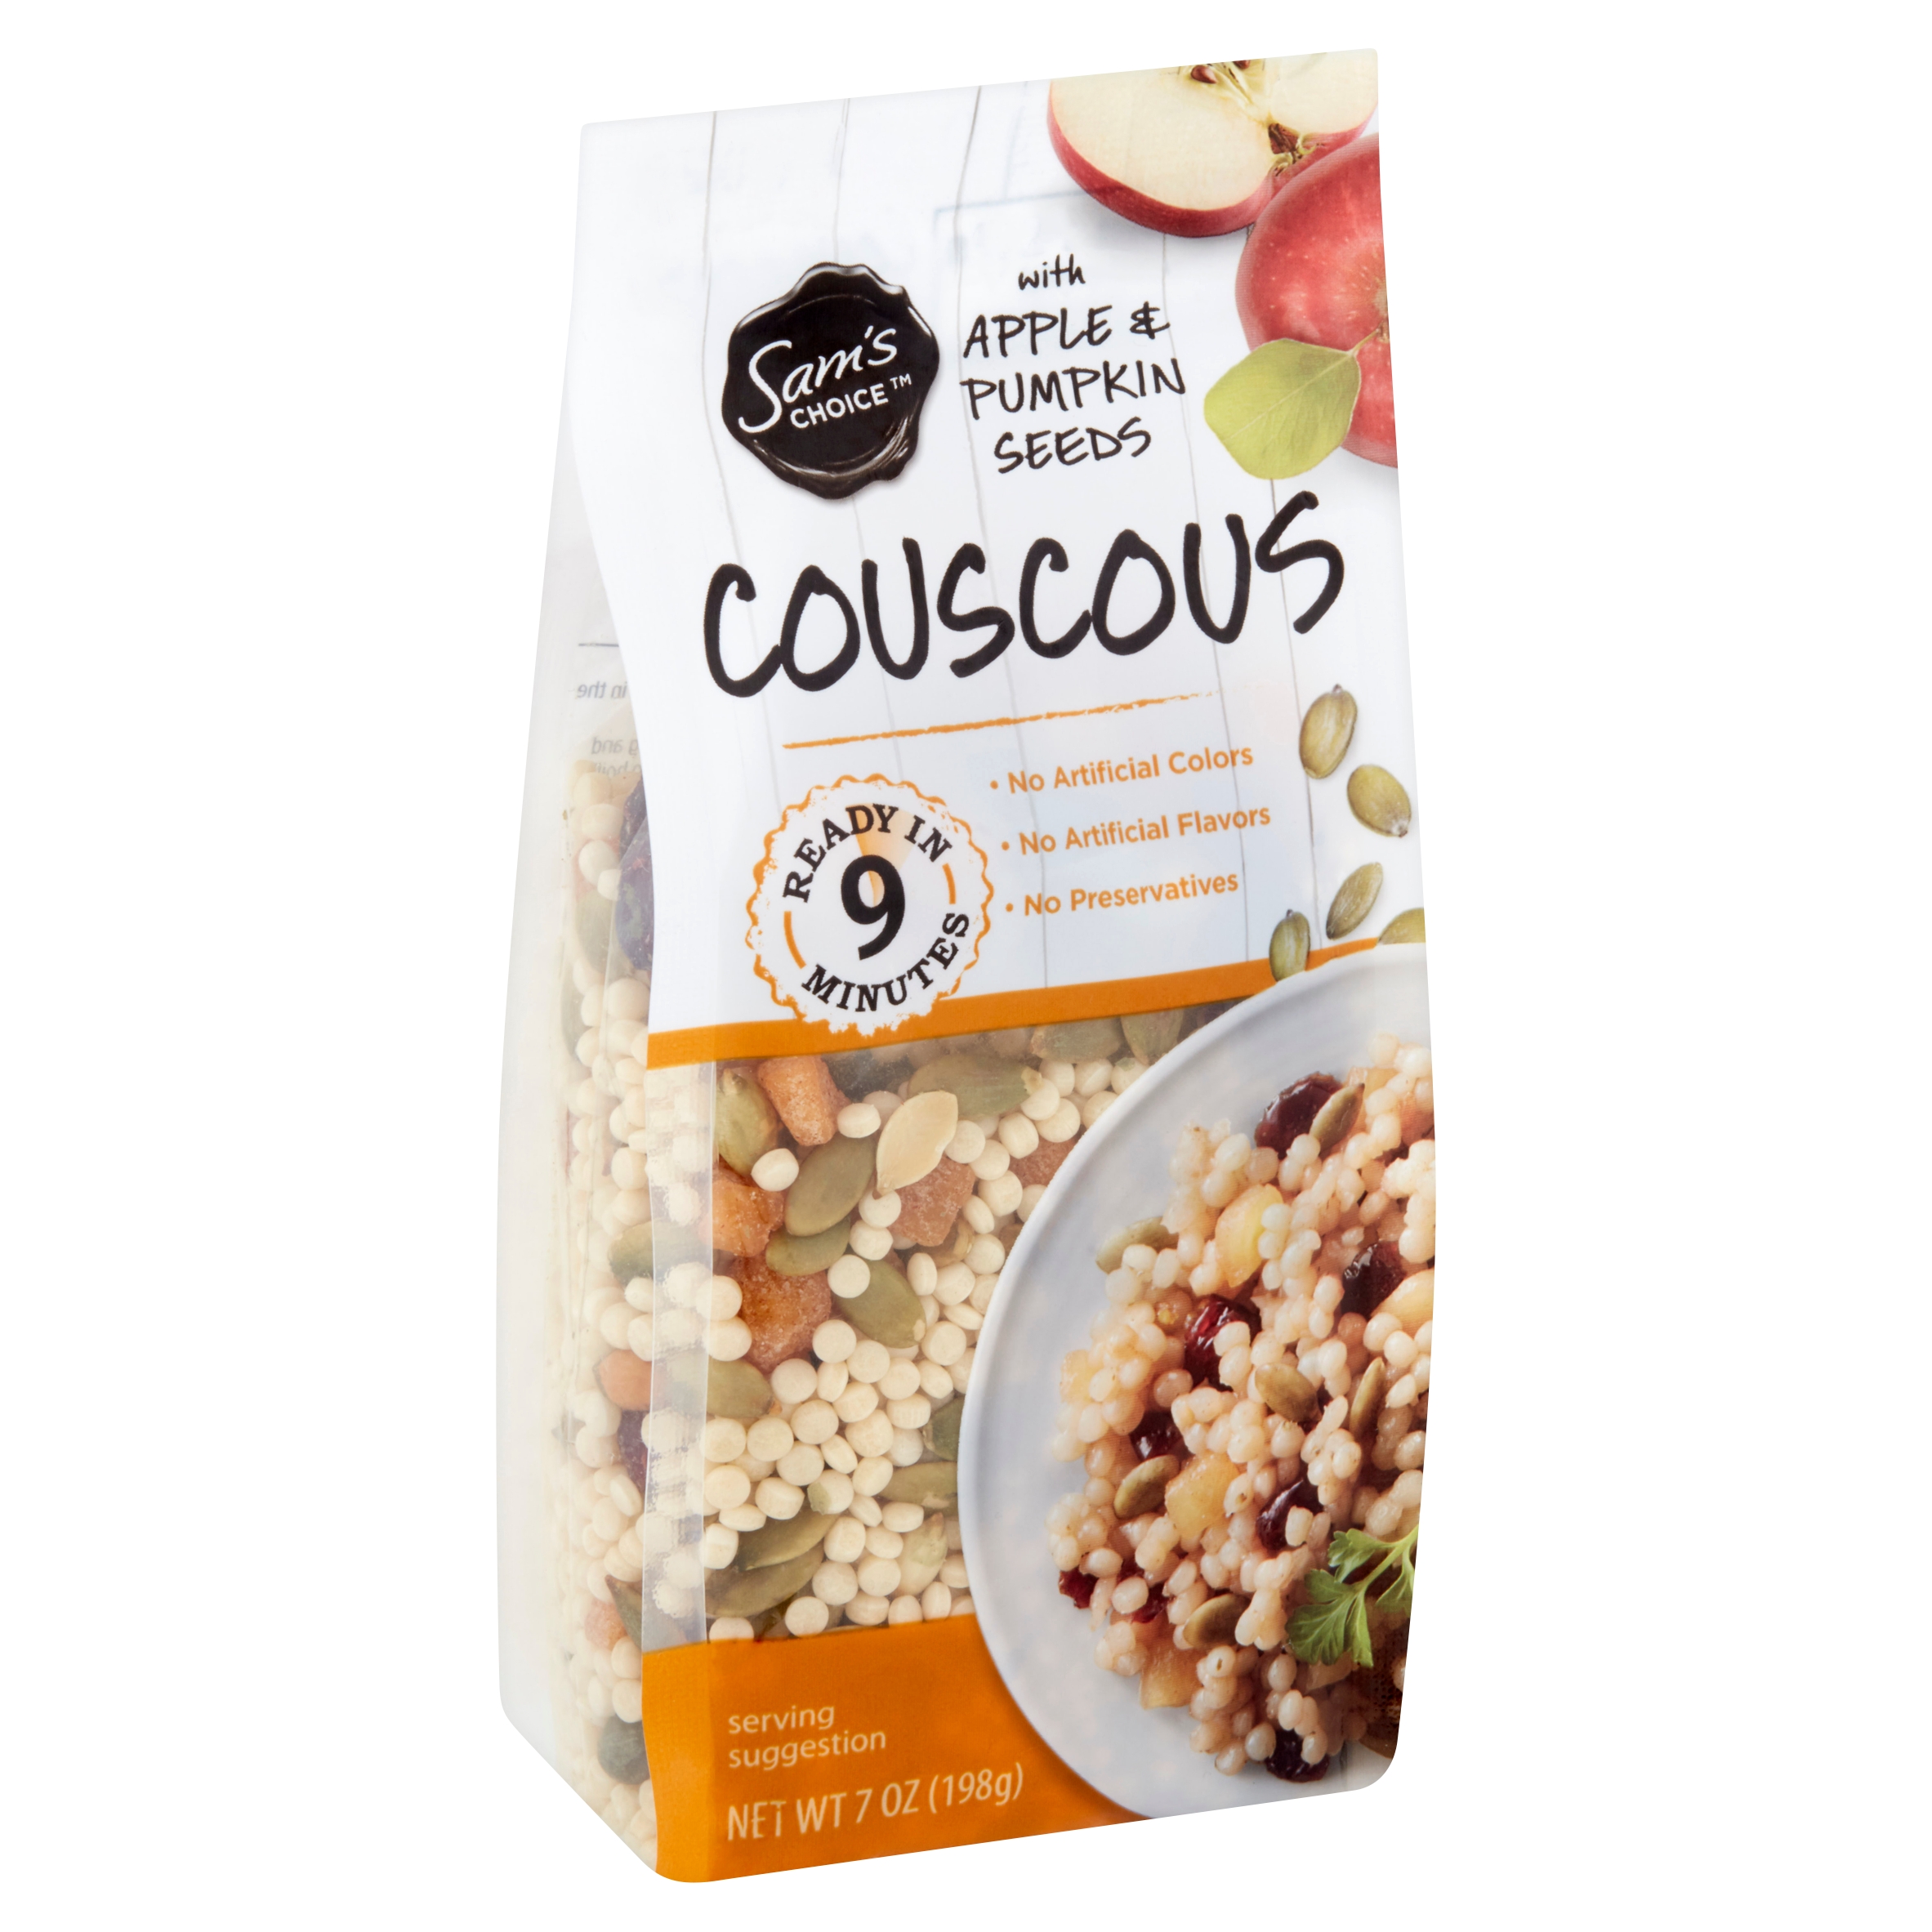 does couscous gluten free